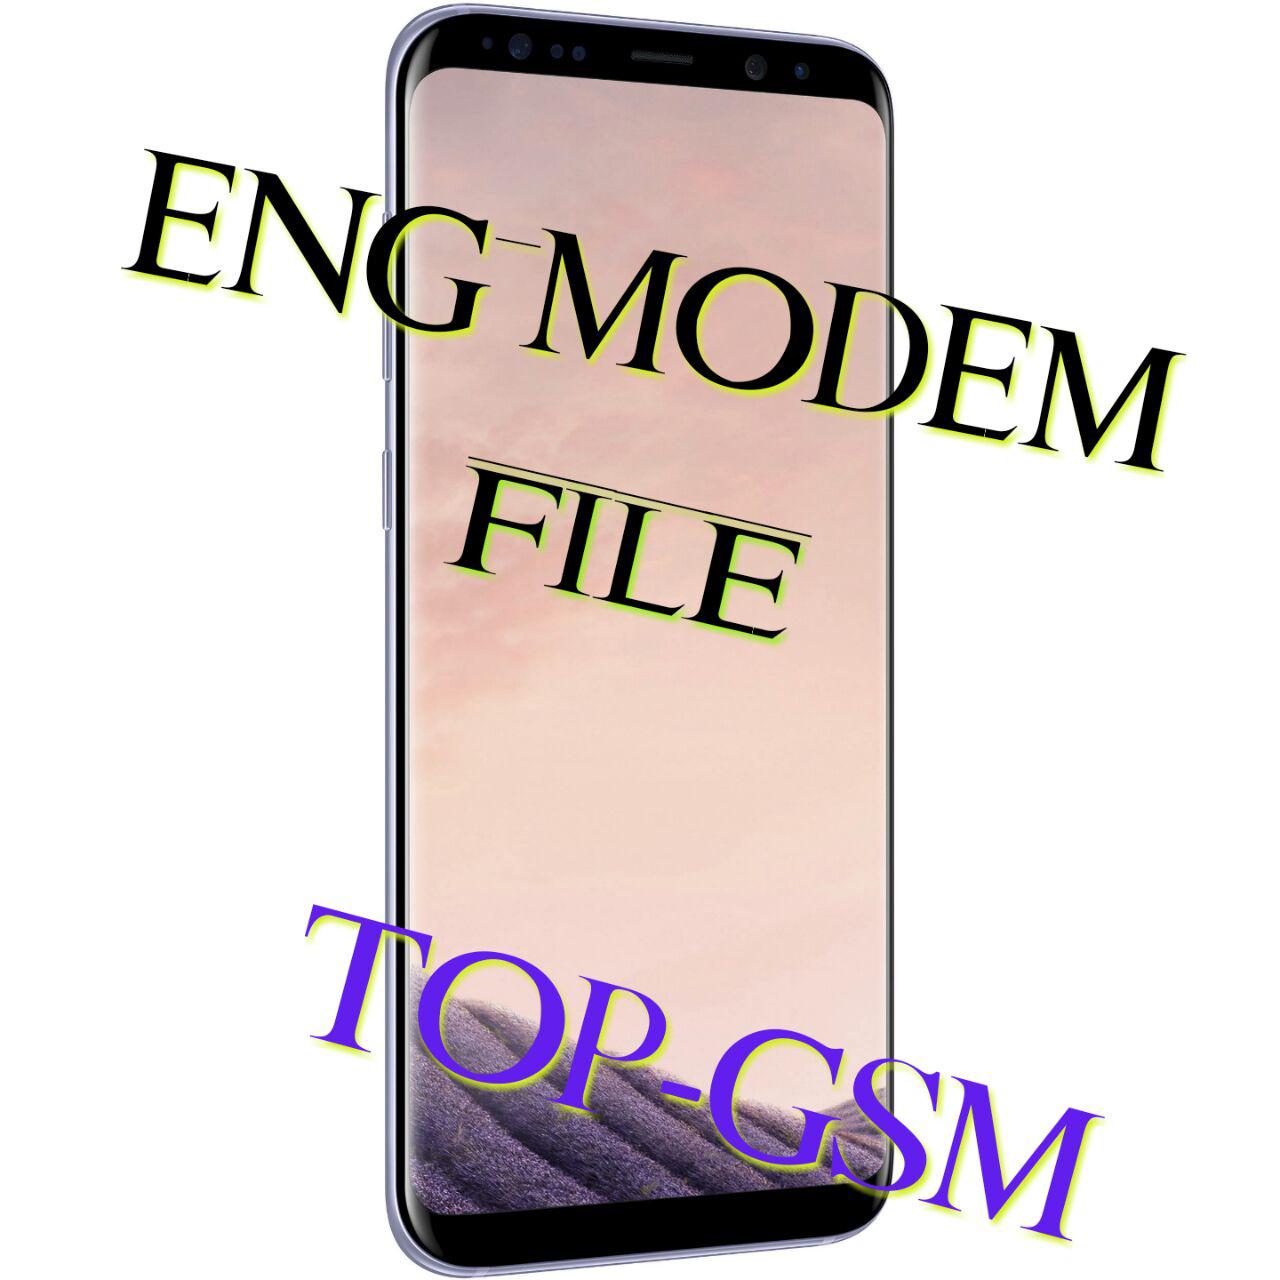 فایل ENG MODEM سامسونگ G925V- حل مشکل سریال و بیسباند و..